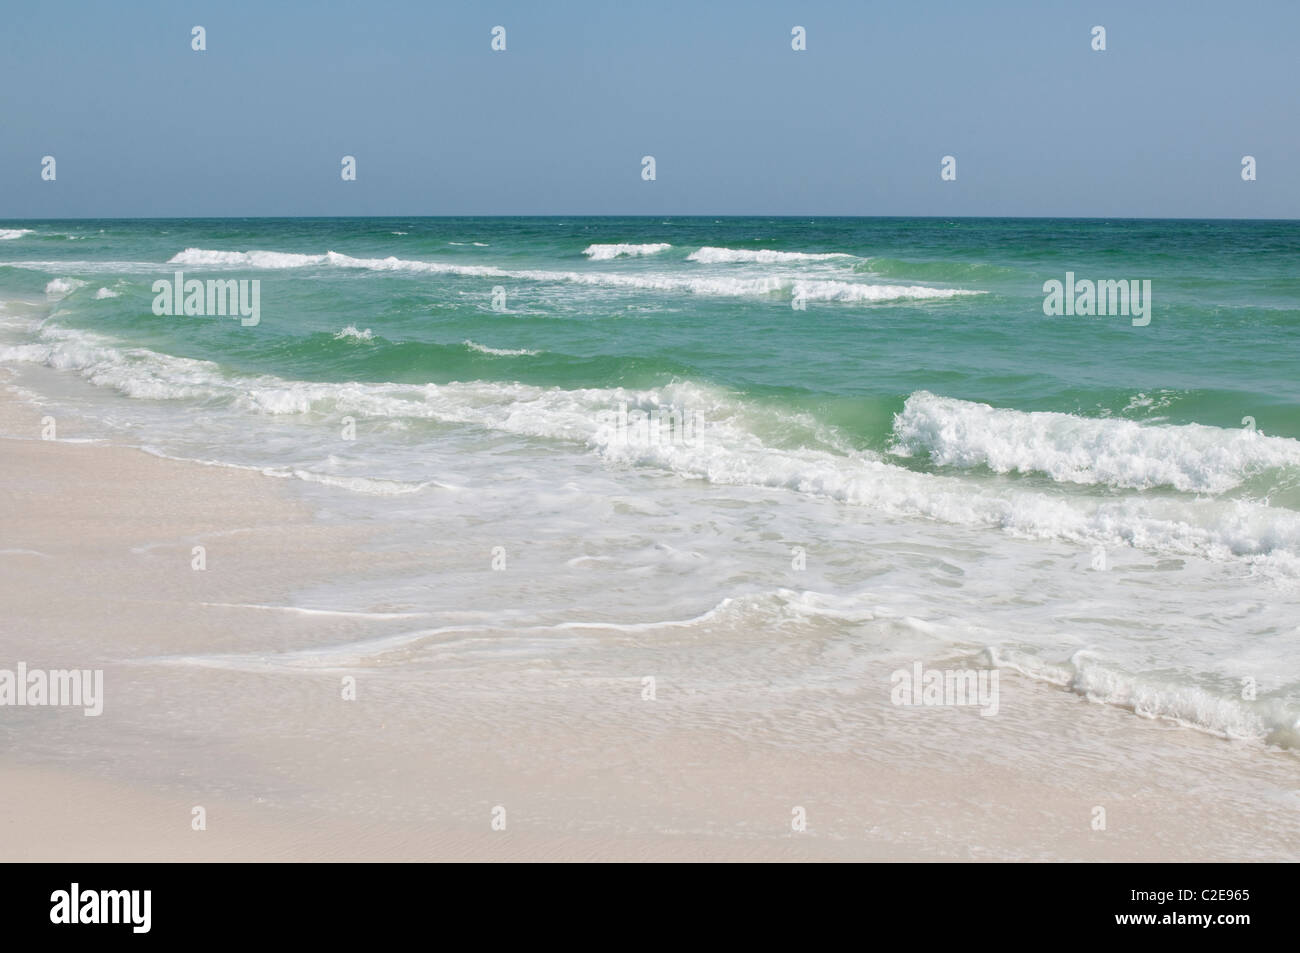 Der Golf von Mexiko bei Rosemary Beach, FL. Rosemary Beach gehört Walton County entlang der Florida Panhandle. Stockfoto